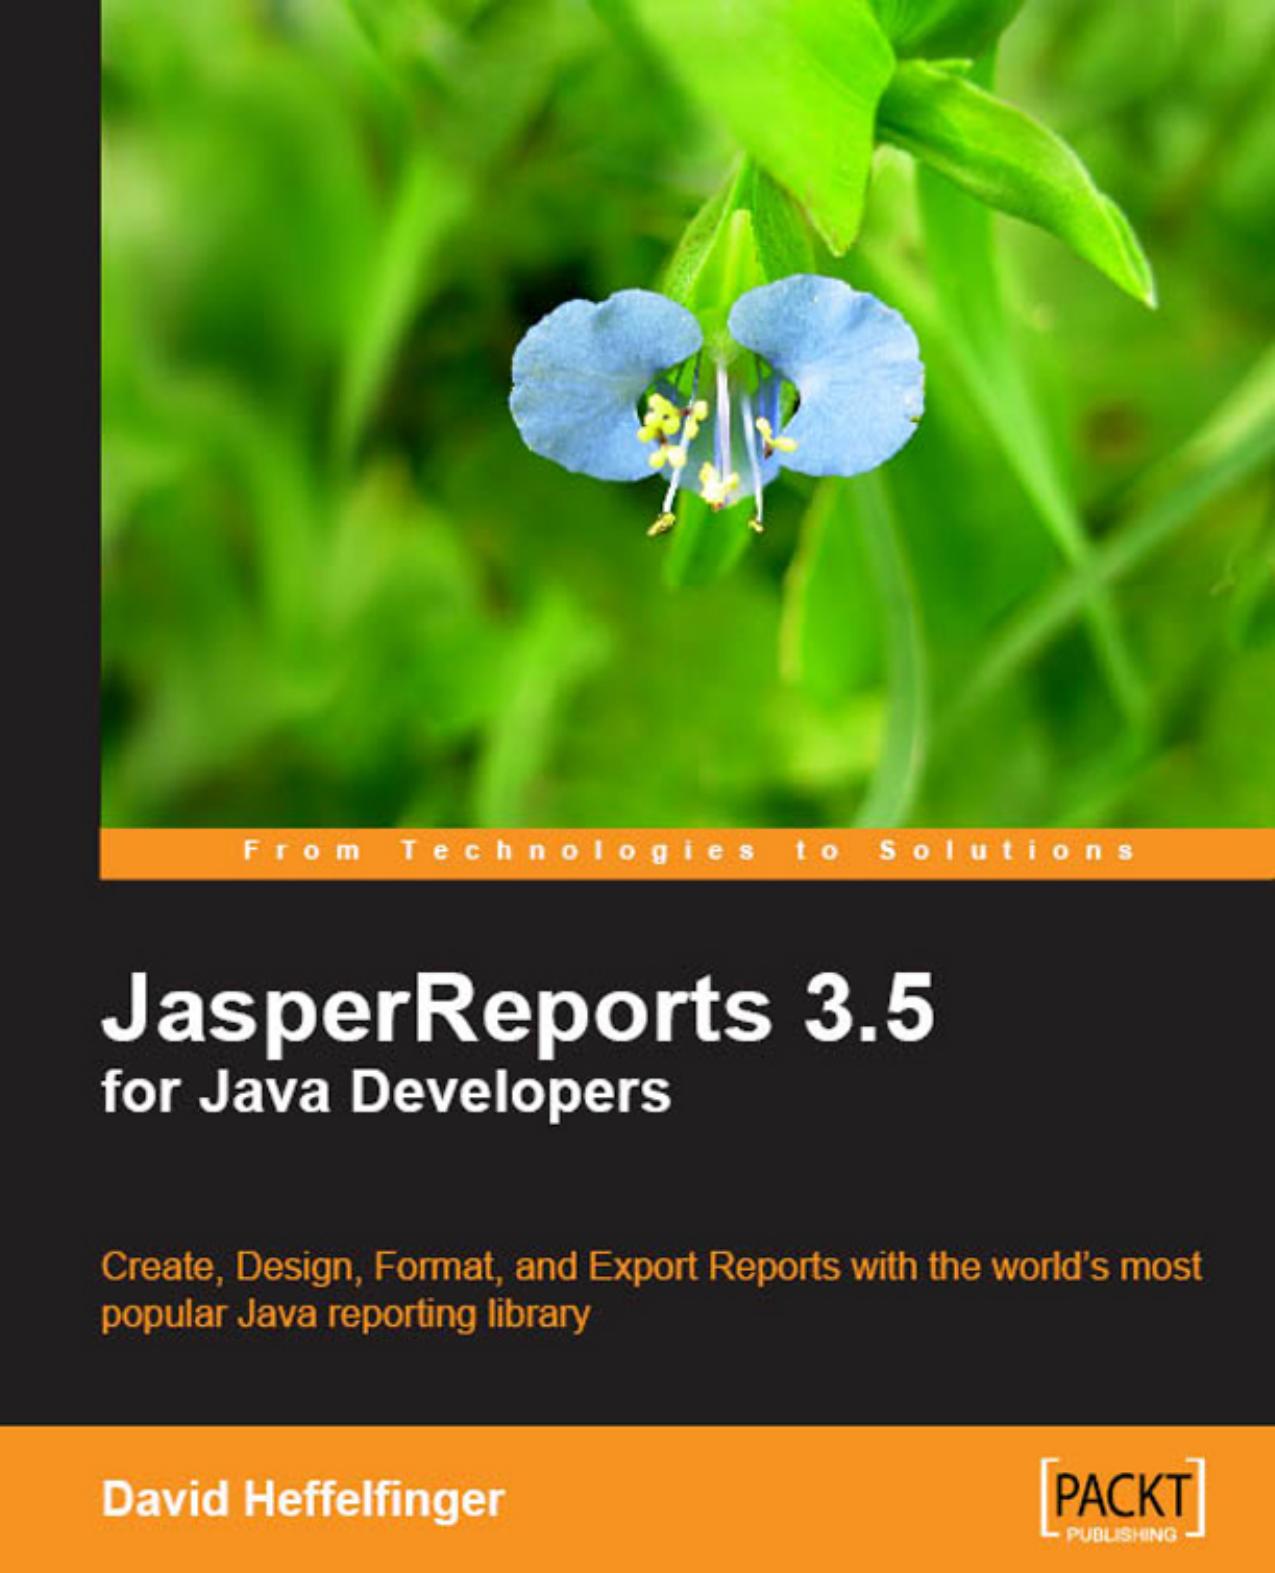 JasperReports 3.5 for Java Developers by David Heffelfinger